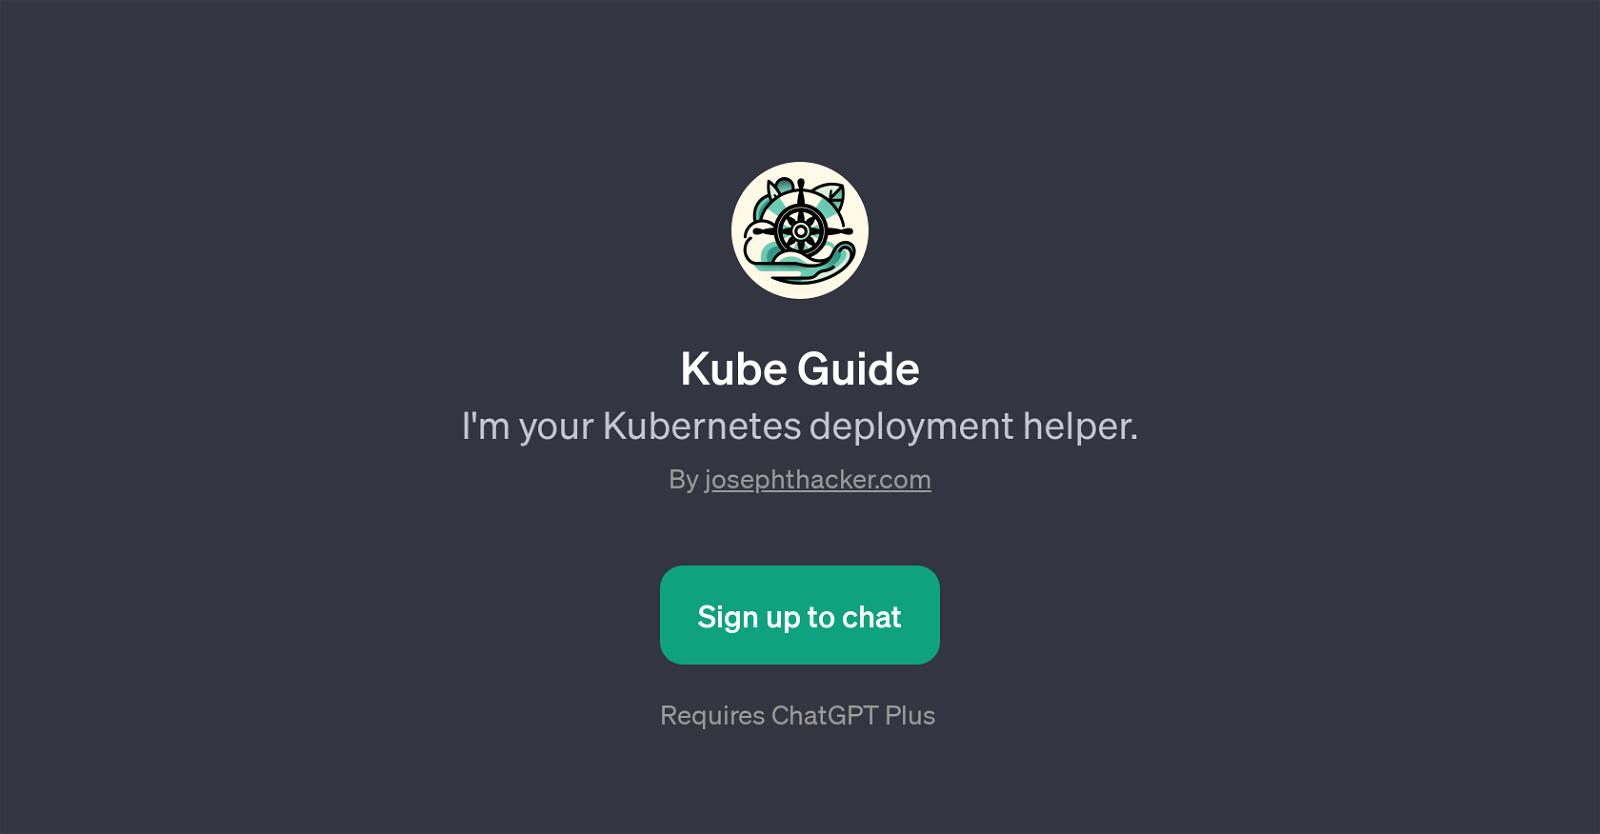 Kube Guide website